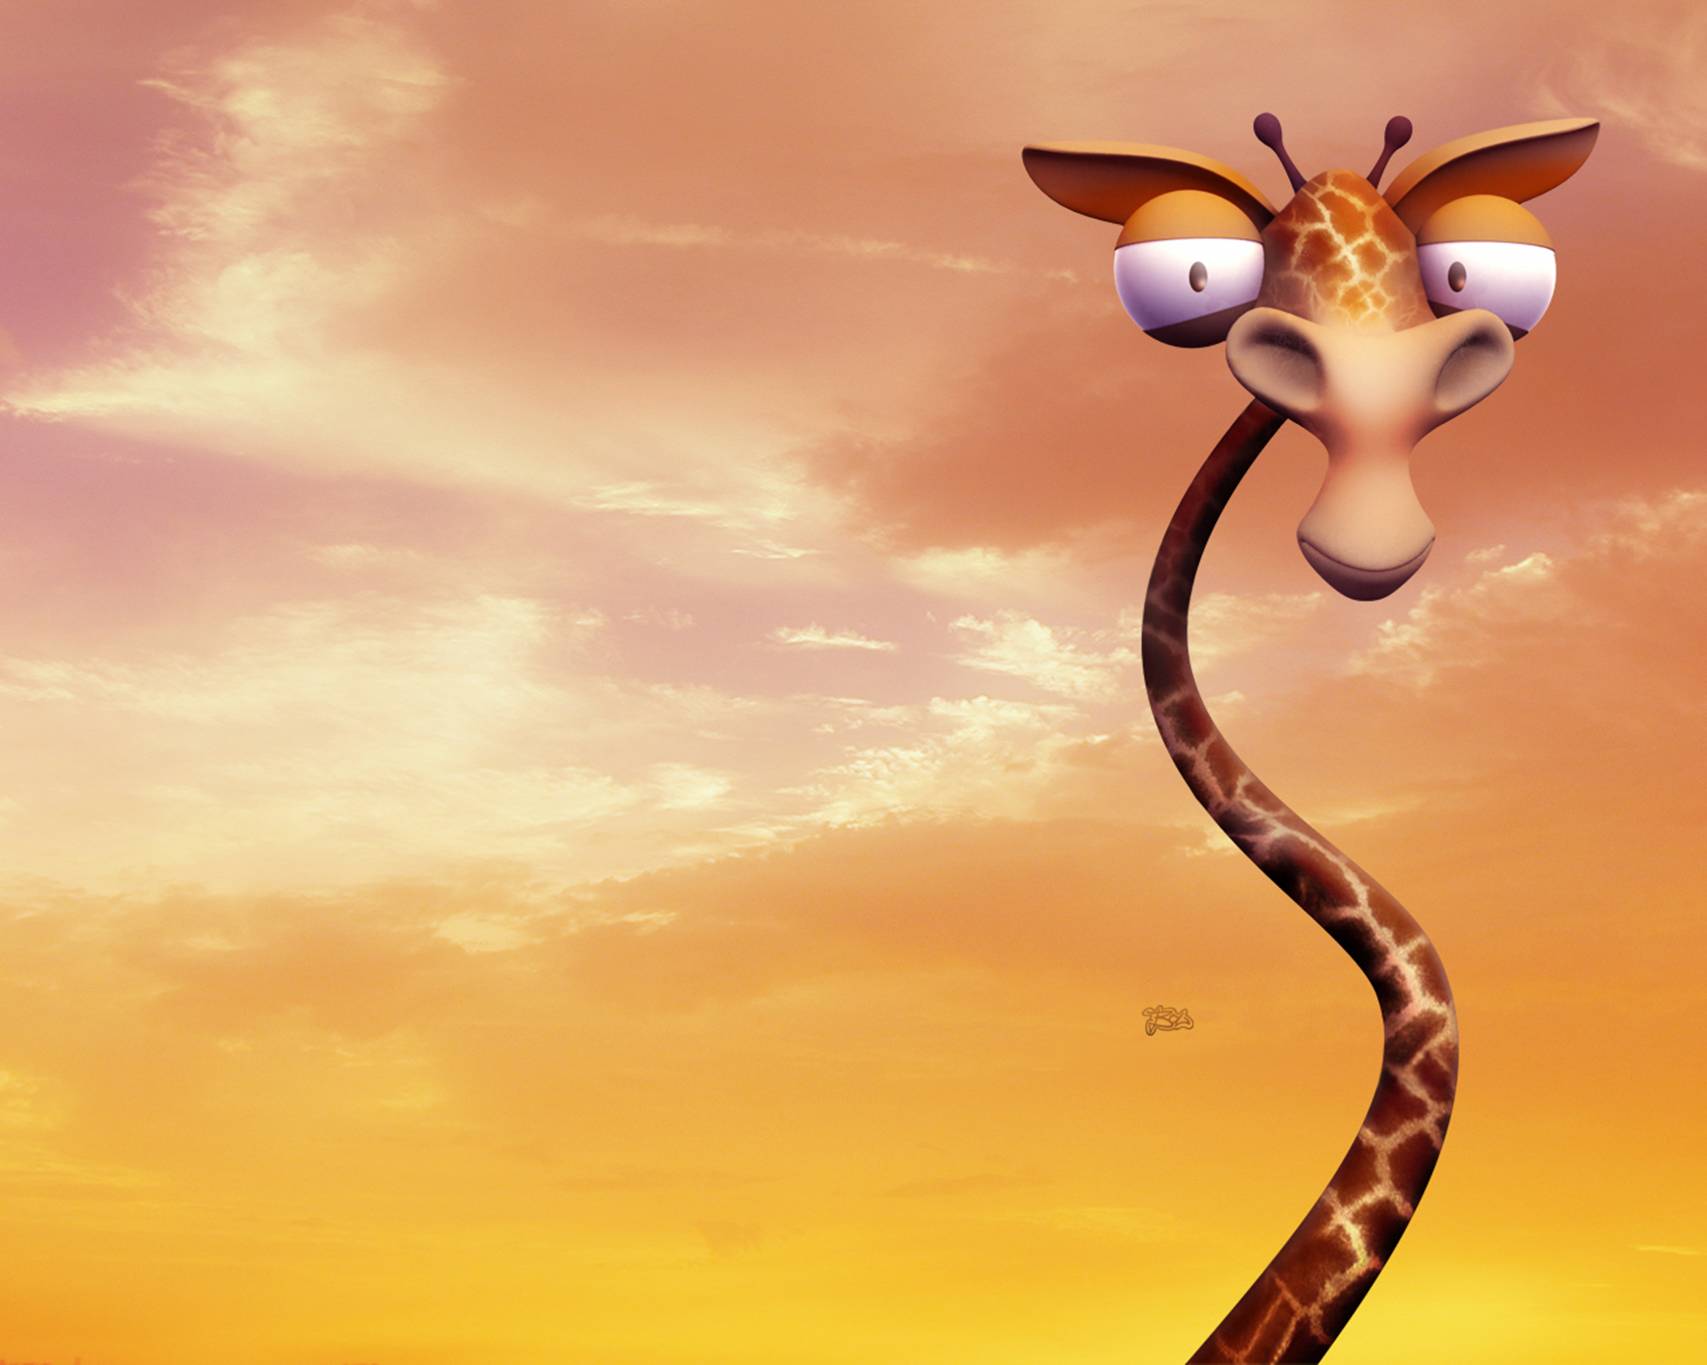 Animals Zoo Park: Funny 3D Cartoon Wallpaper Desktop Background